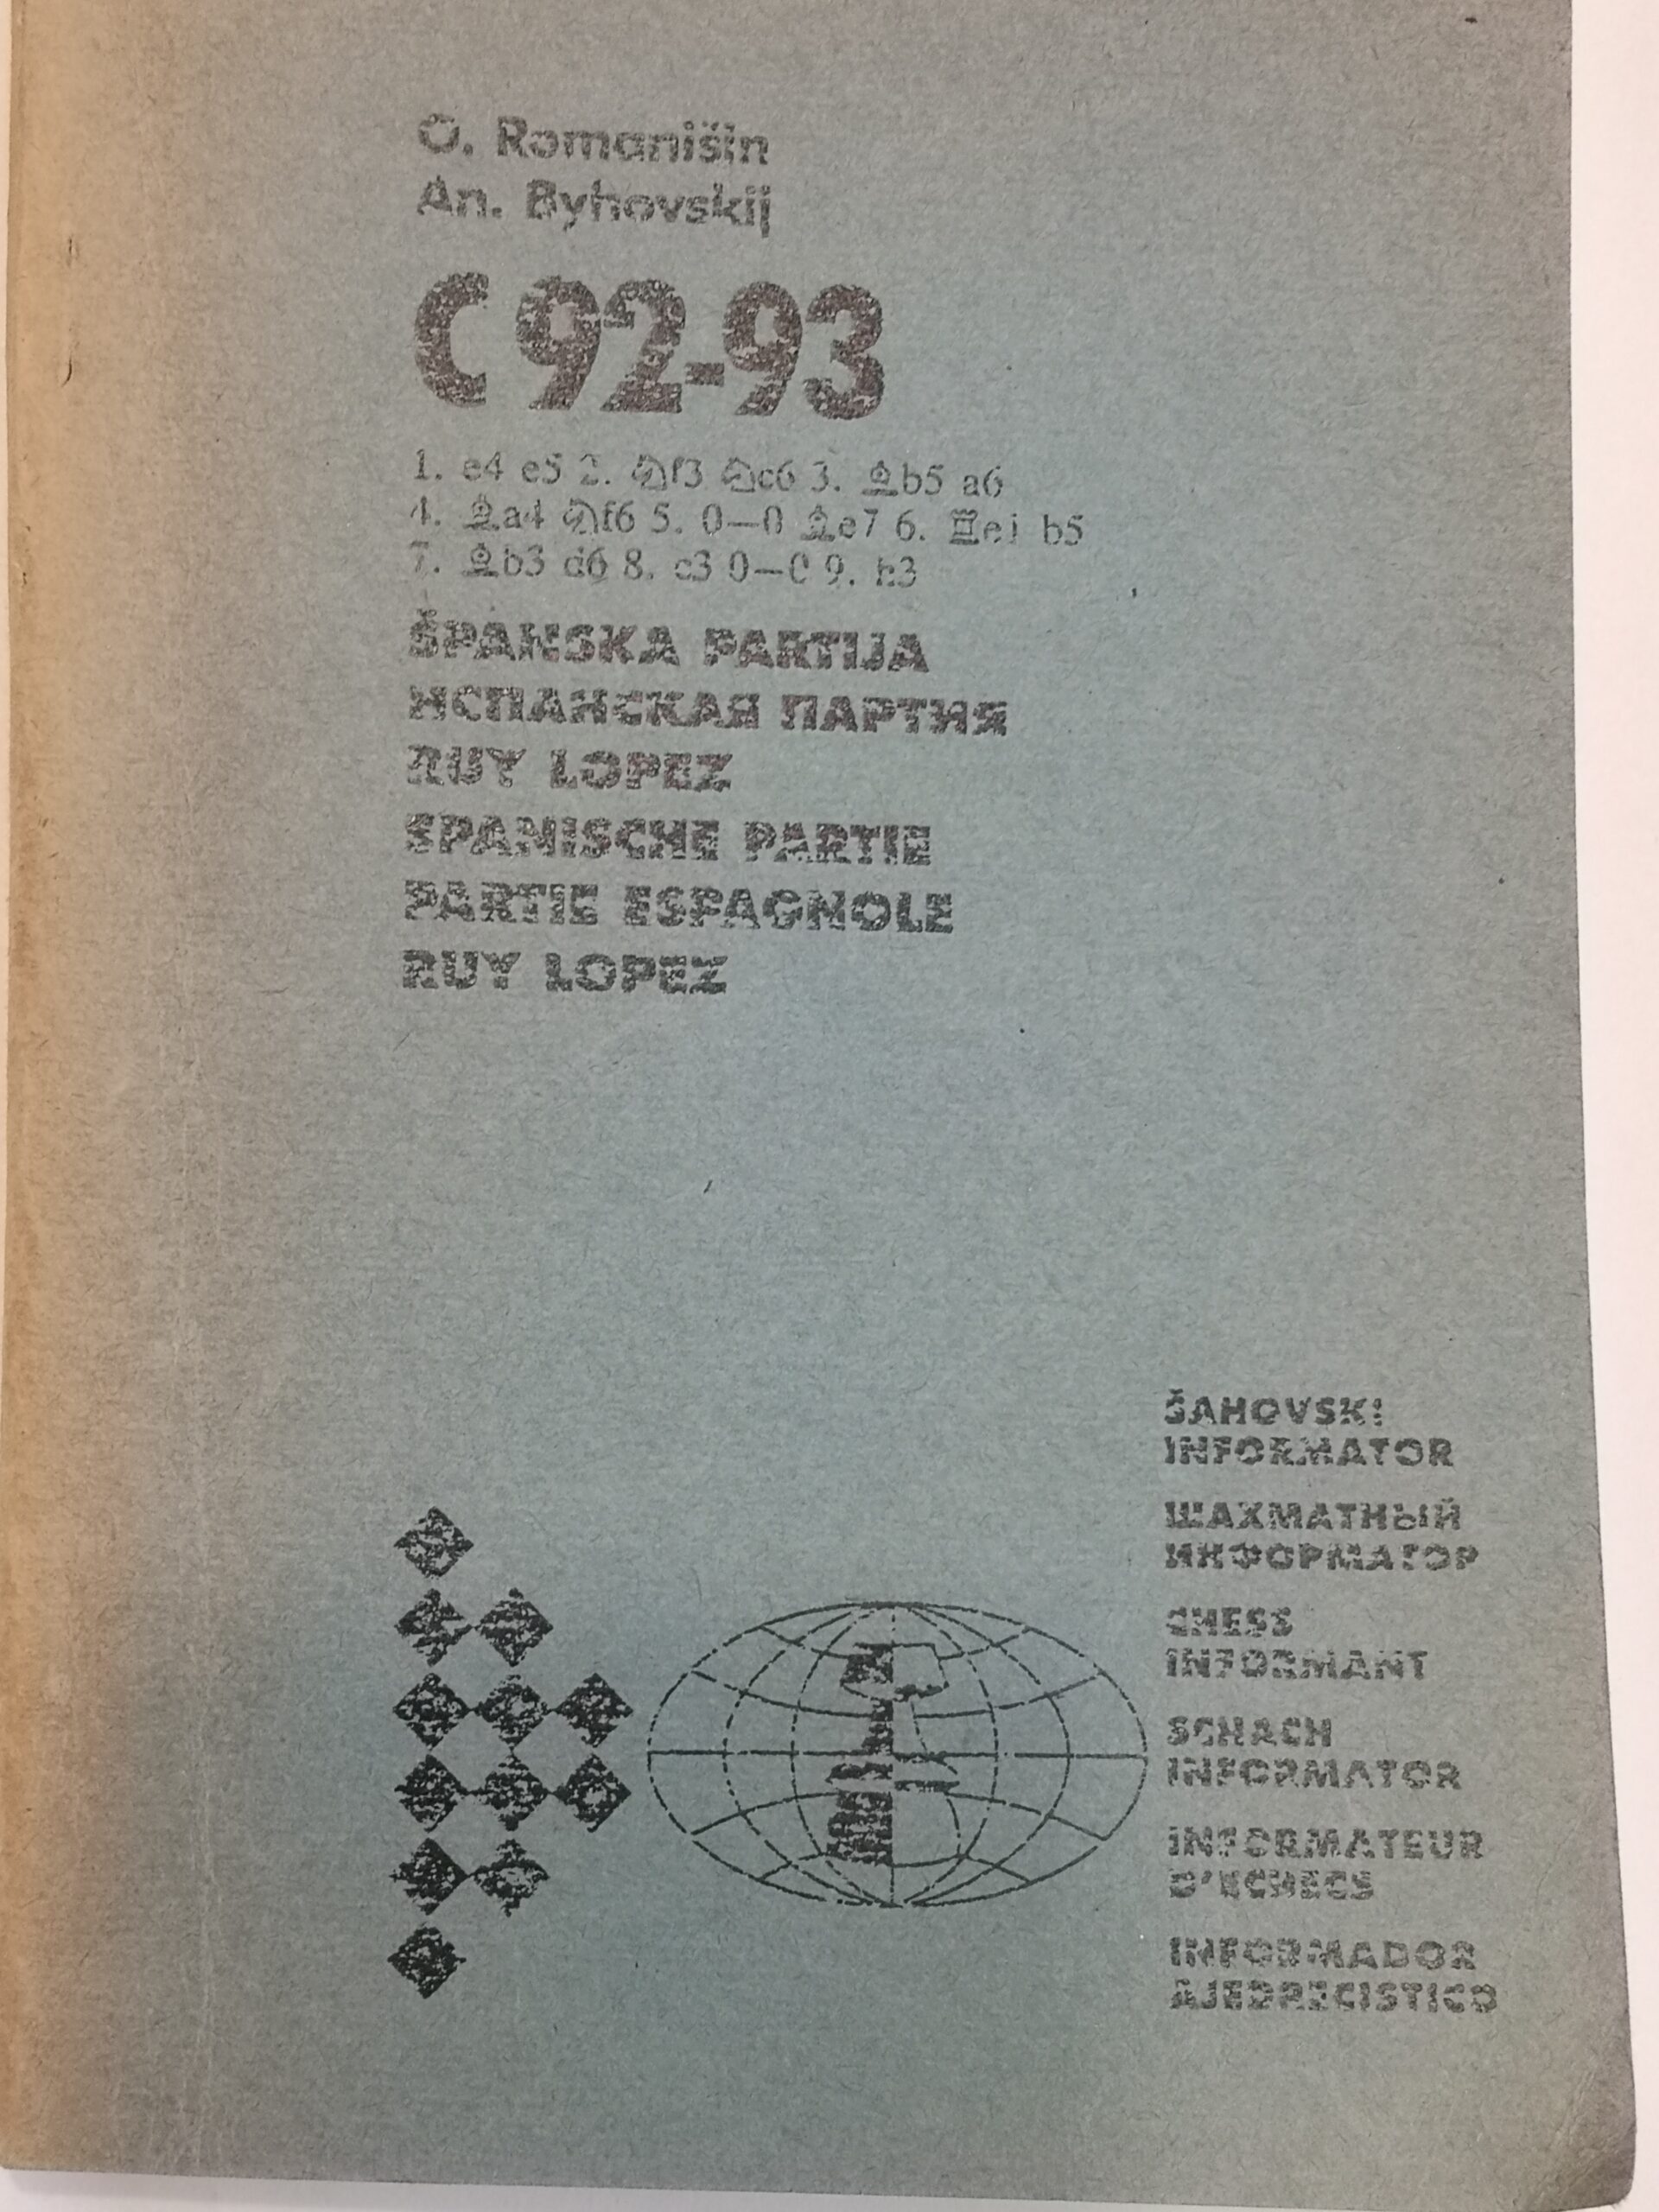 274# Sahovski Informator C92-93 partia hiszpańska 1.e4 e5 2.Sf3 Sc6 3.Gb5 a6 (O.Rmanishin, A.Byhovskij)